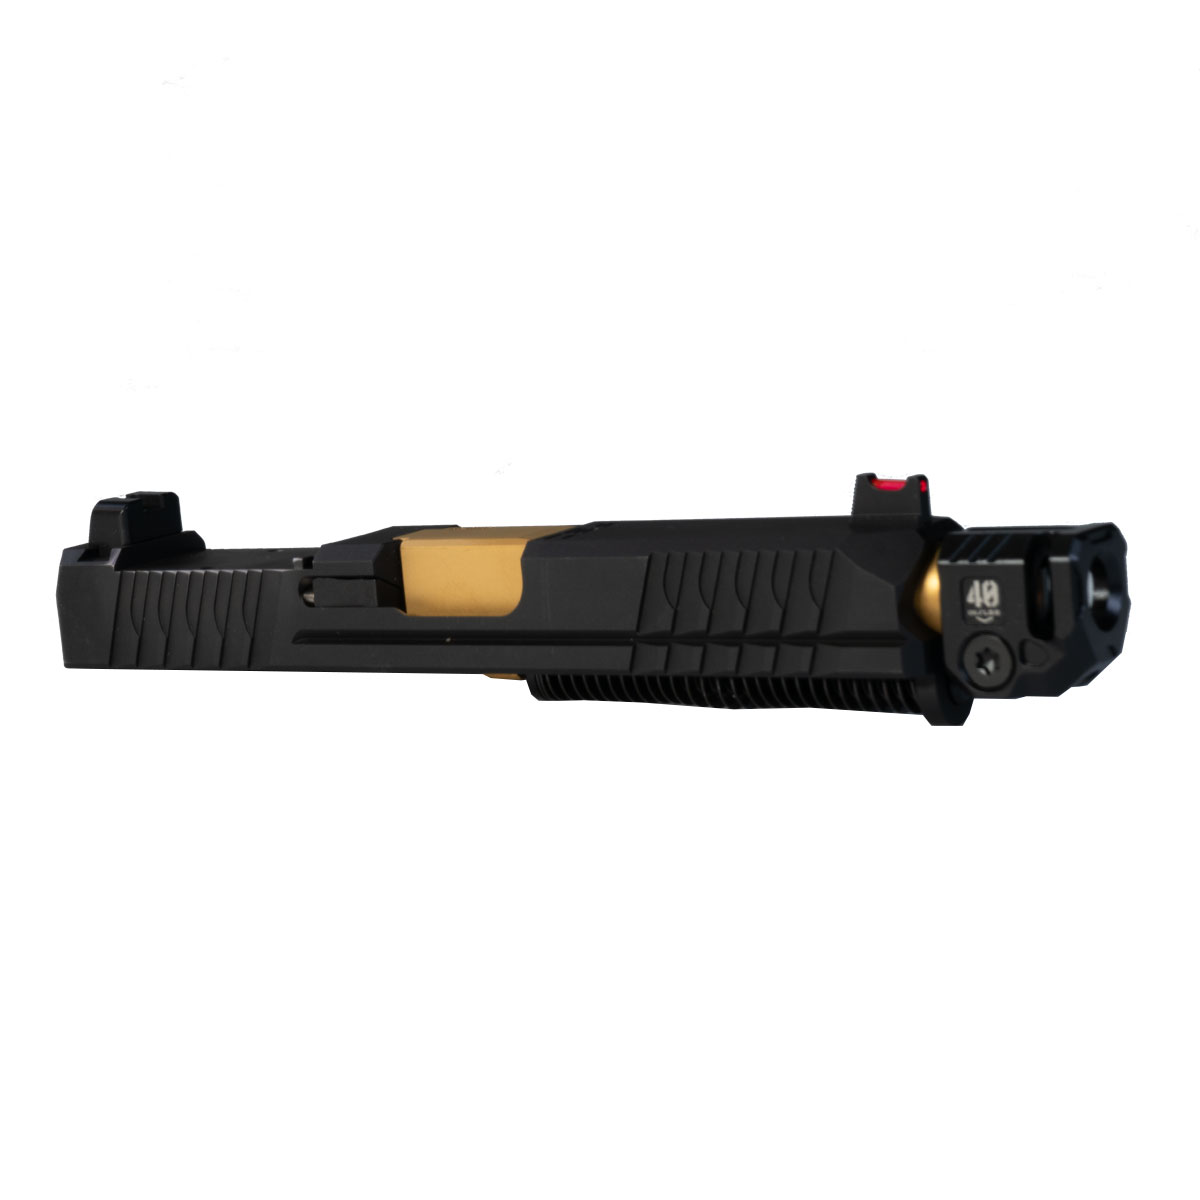 DD 'Hasta w/ Strike Industries Compensator' 9mm Complete Slide Kit - Glock 19 Gen 1-3 Compatible